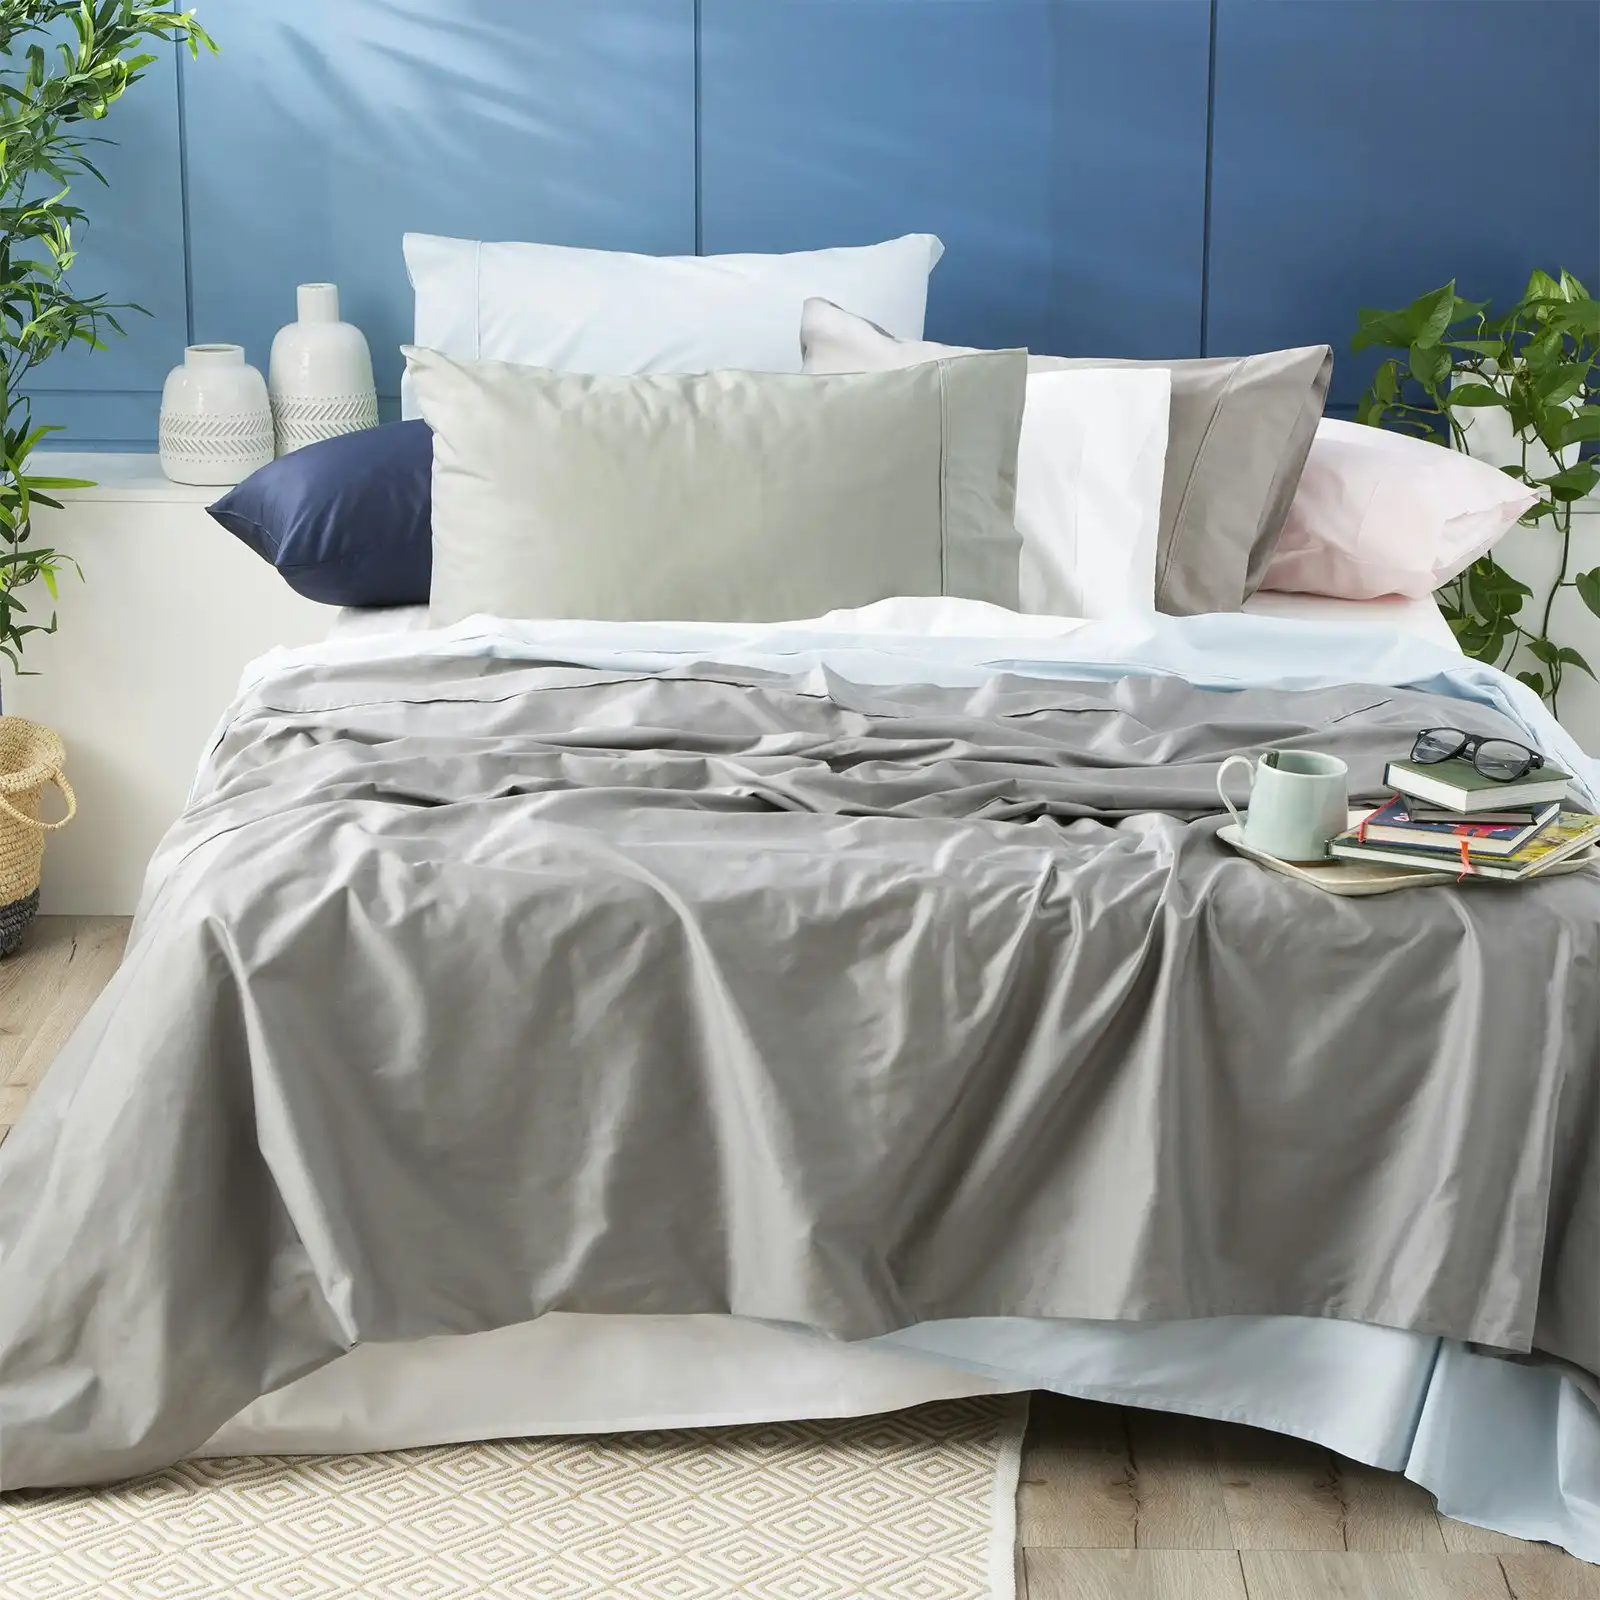 Park Avenue Super King Bed Sheet/Pillowcase Set 500TC Bamboo Cotton Bedding Dove